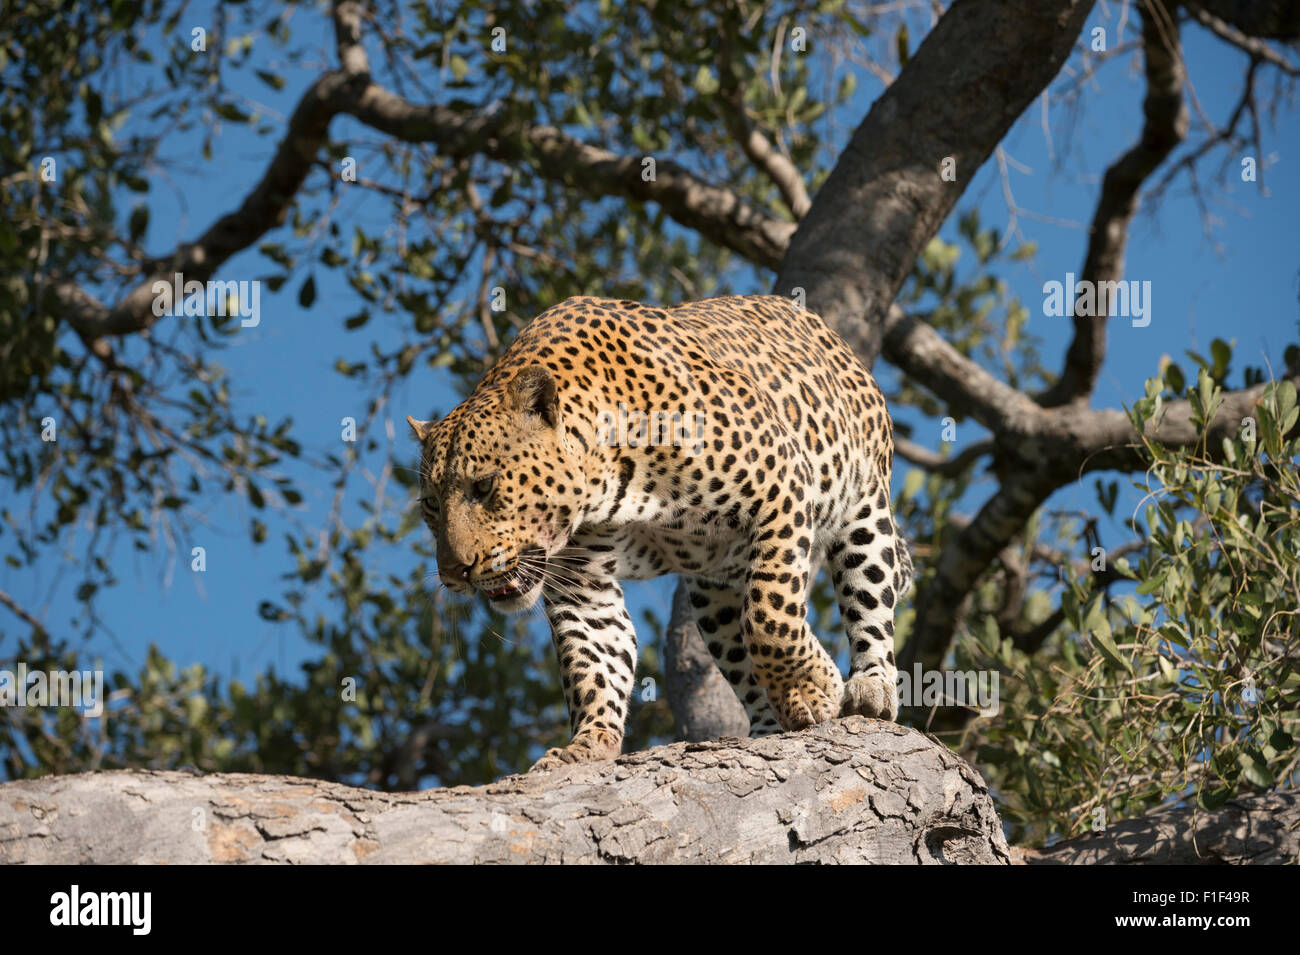 African Male,léopard Panthera pardus, redescendez tree Banque D'Images